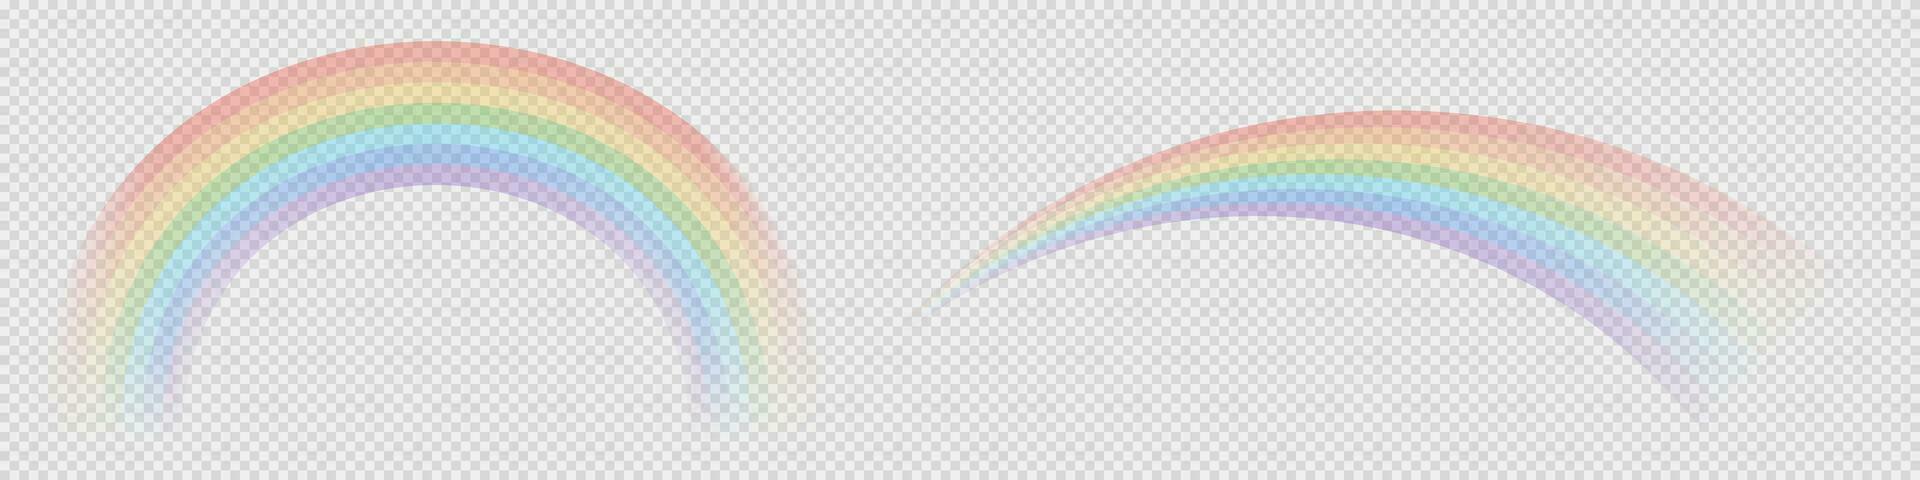 Rainbow icon. Isolated realistic after rain sky background. Rainbow arc. Colorful arch illustration. vector